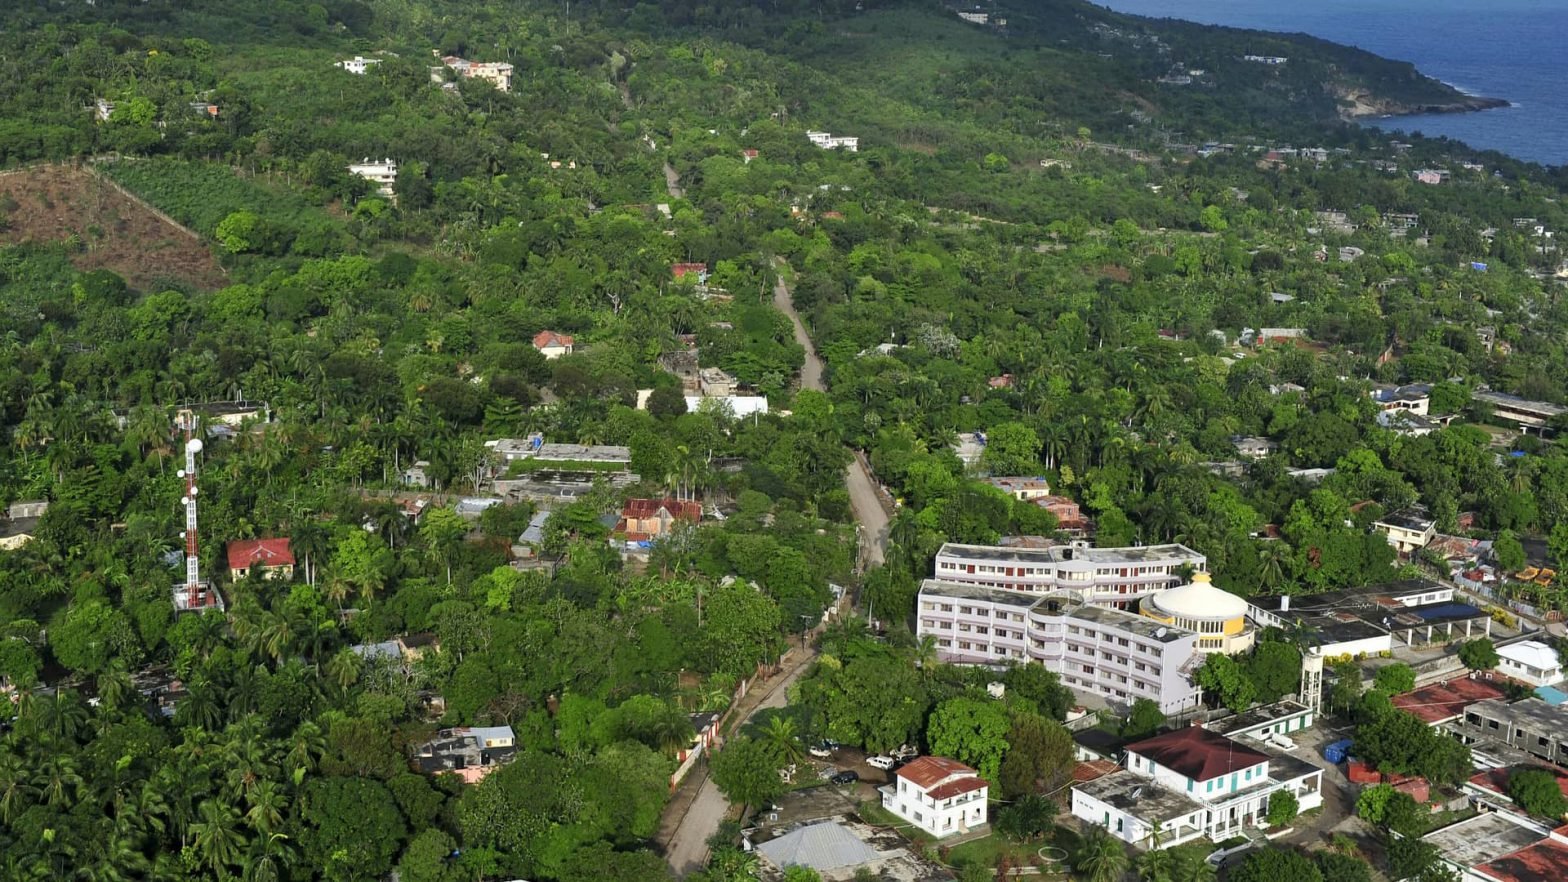 Port AU Prince